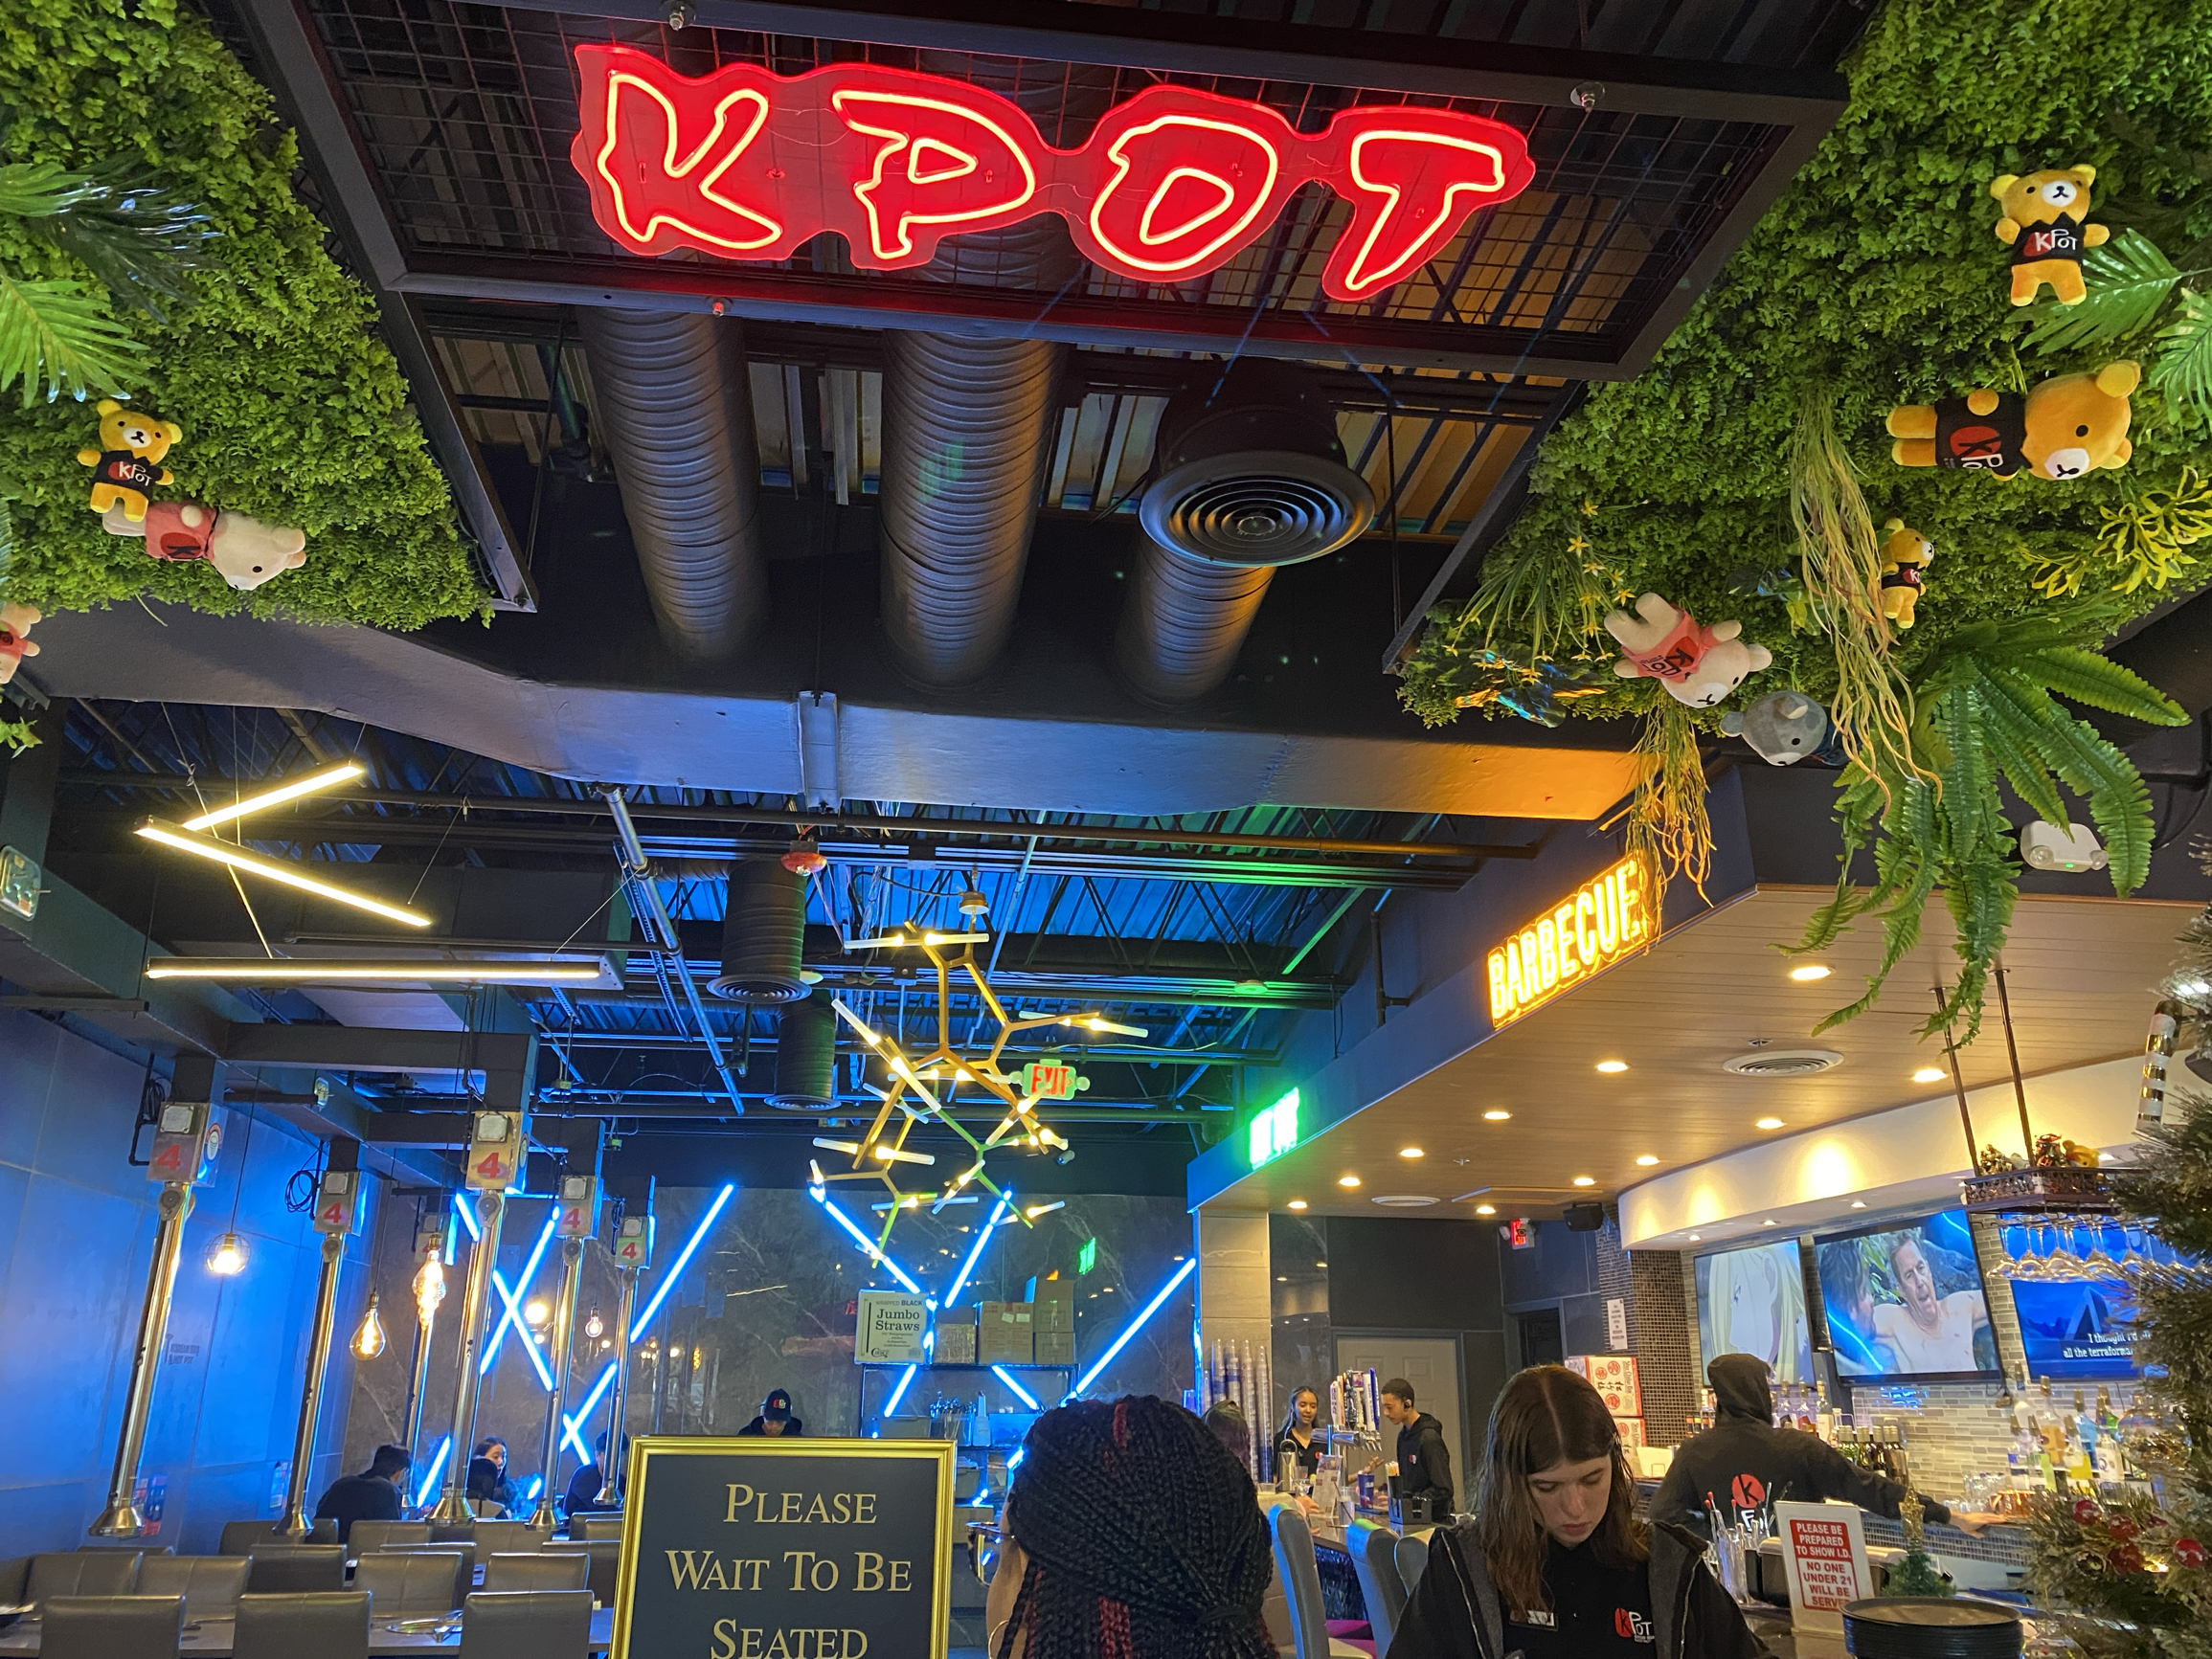 KPot—- hotpot and bbq